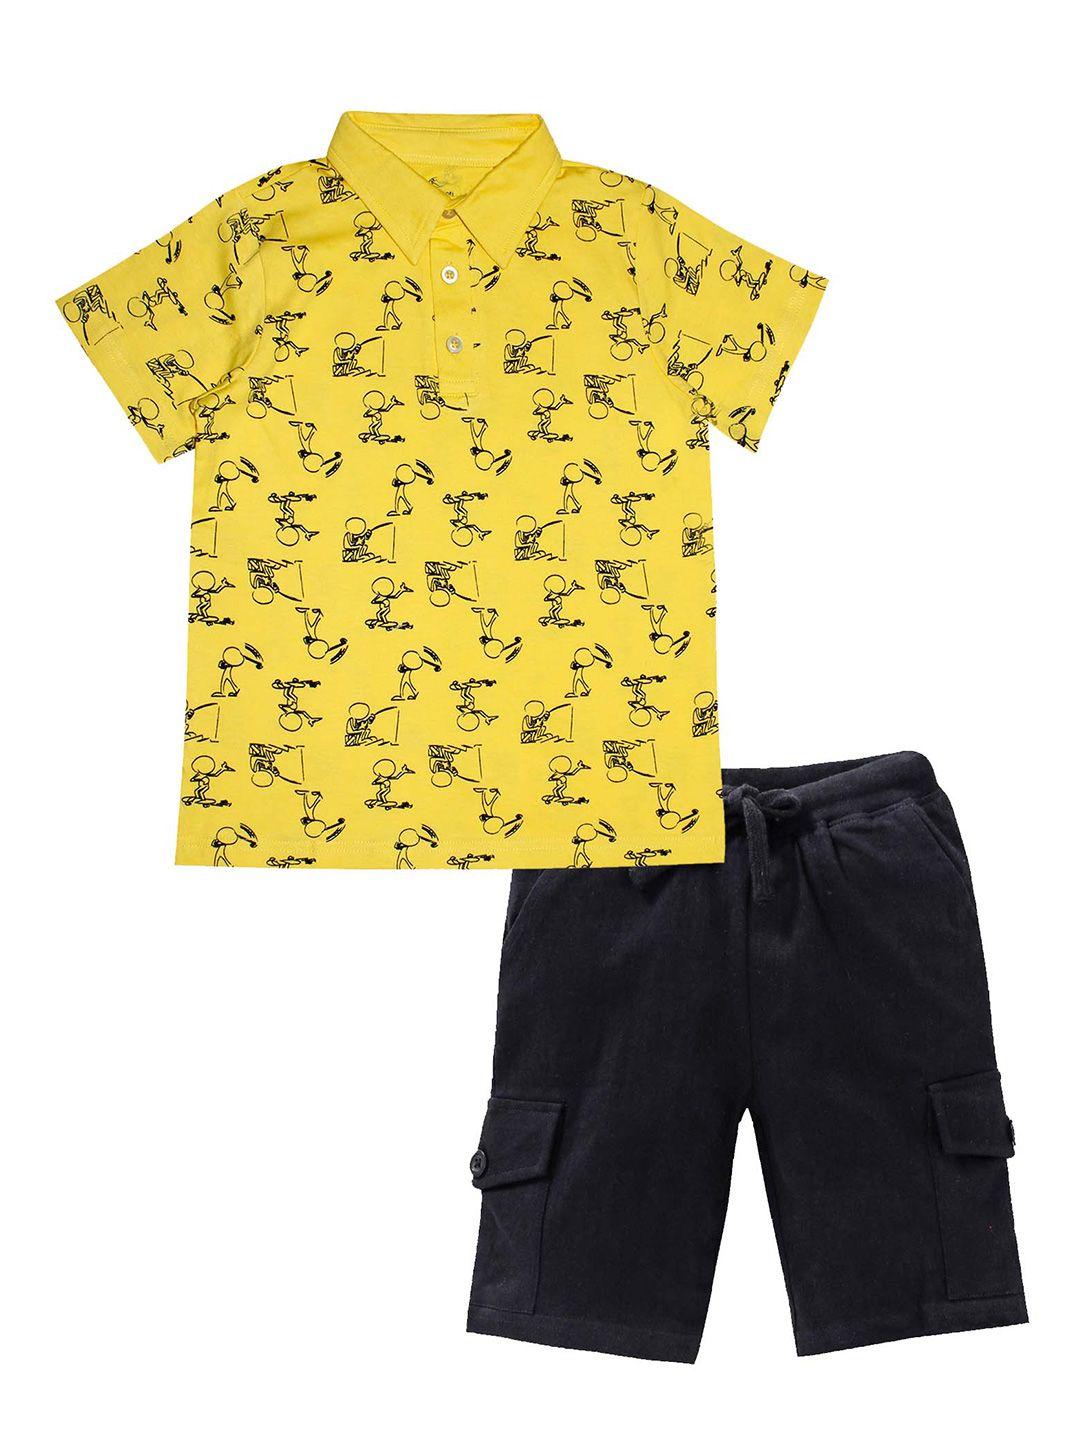 kiddopanti-boys-yellow-&-black-printed-pure-cotton-t-shirt-with-shorts